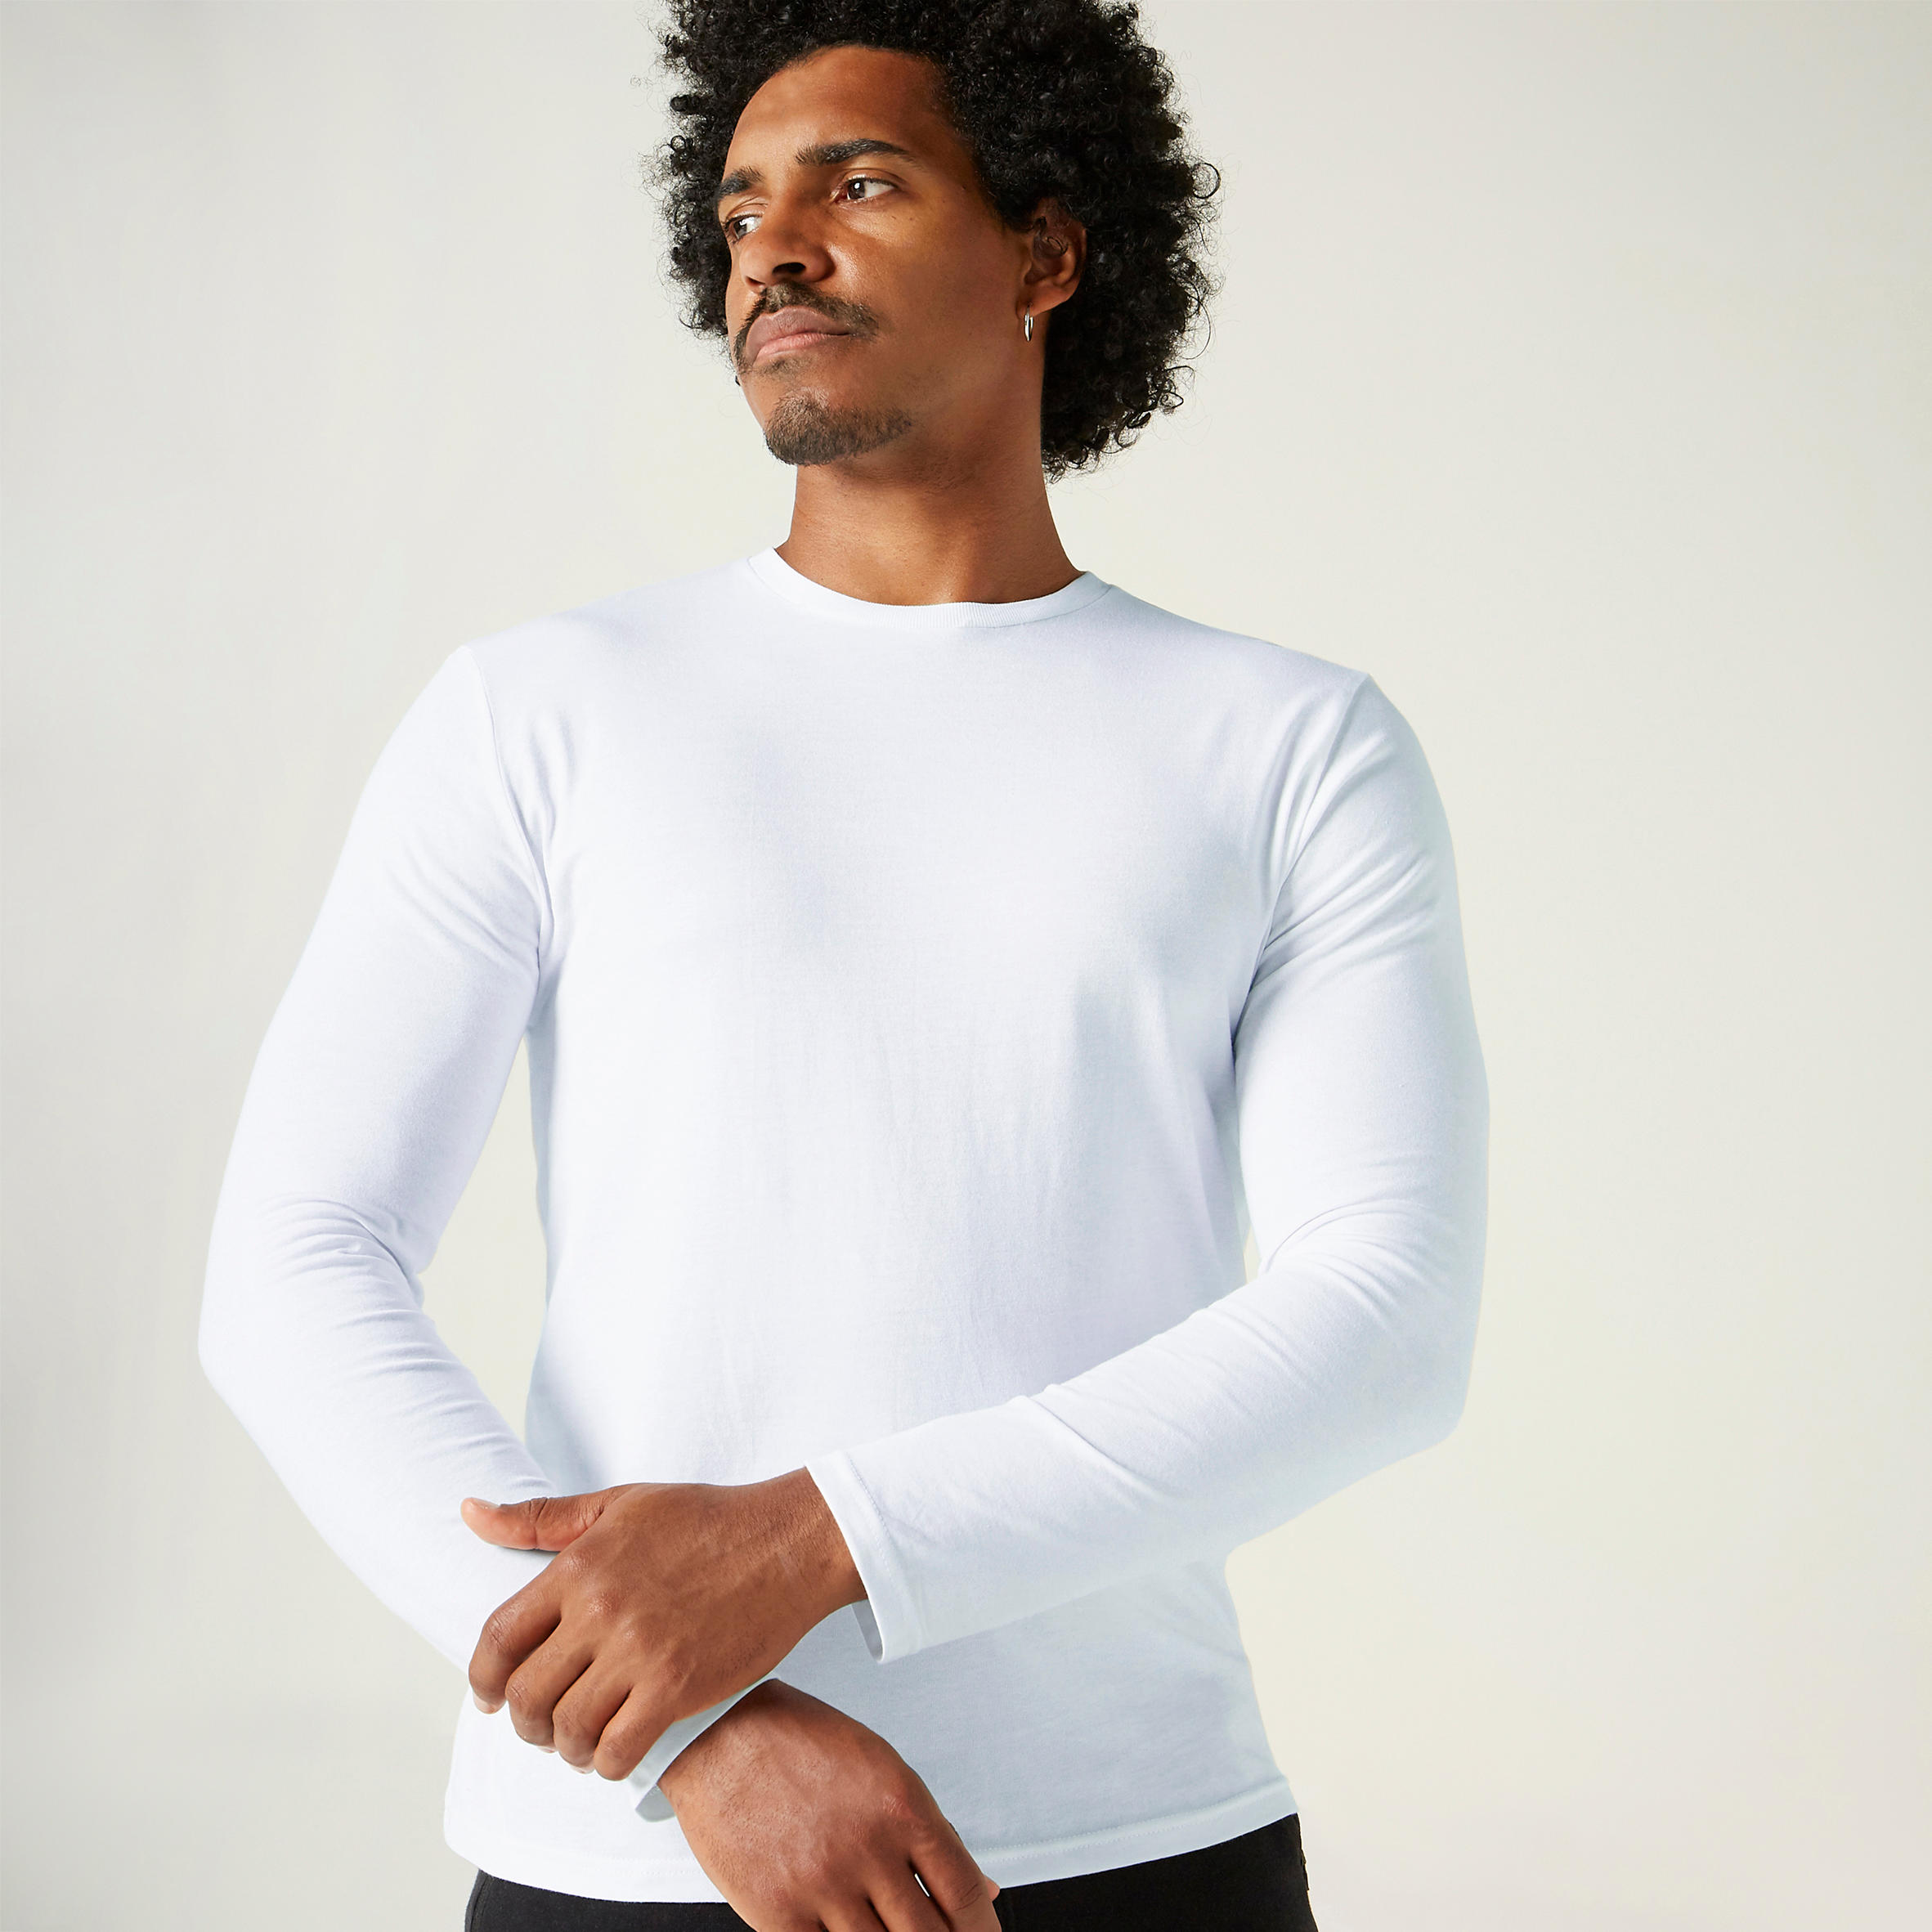 DOMYOS Men's Long-Sleeved Straight-Cut Crew Neck Cotton Fitness T-Shirt 100 - Glacier White